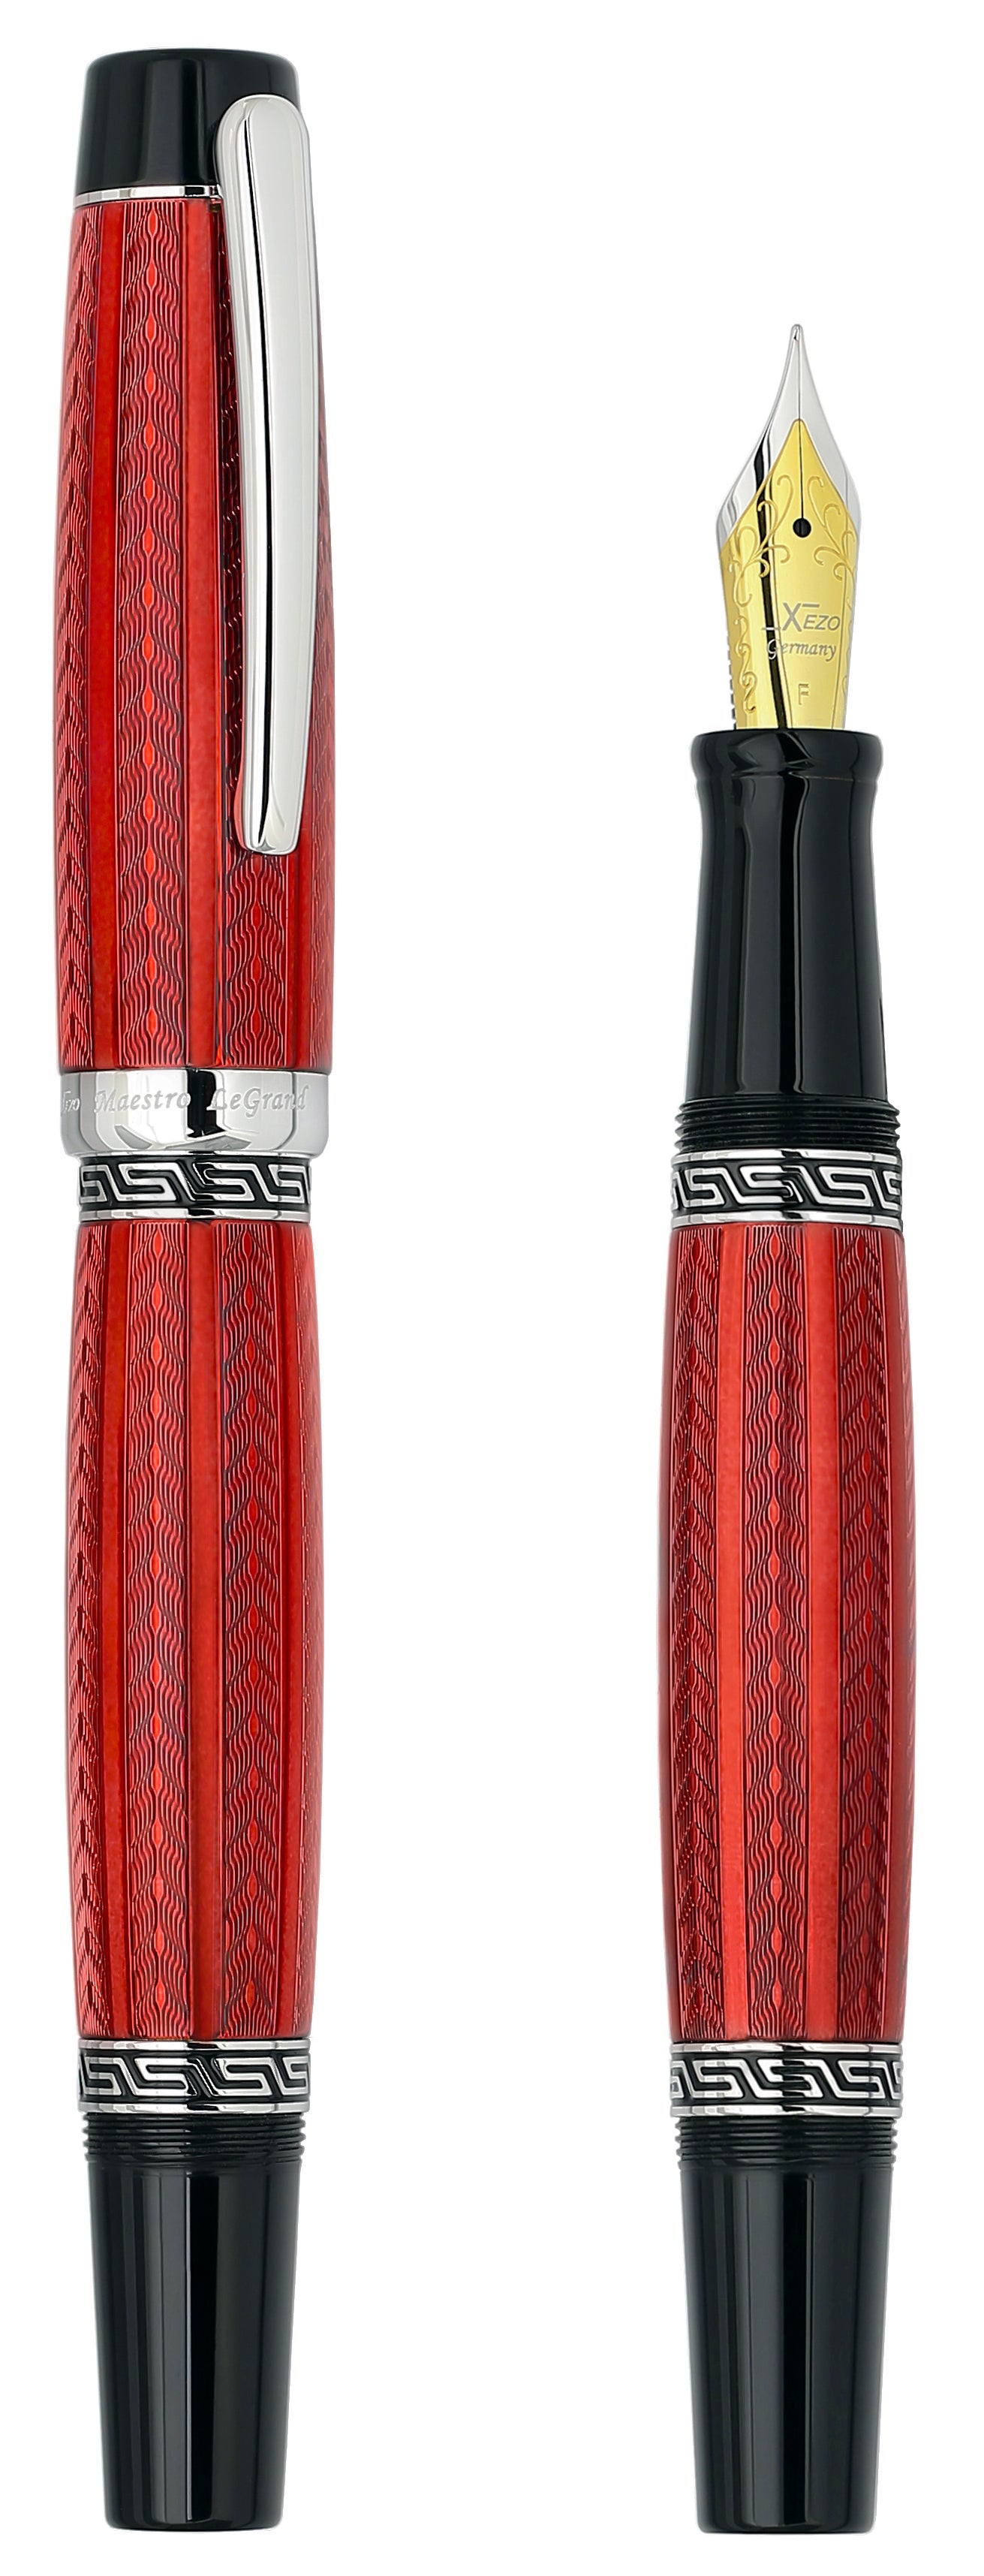 Xezo – Comparison between 3/4 view of the capped and uncapped Maestro LeGrand Rhodochrosite F fountain pen